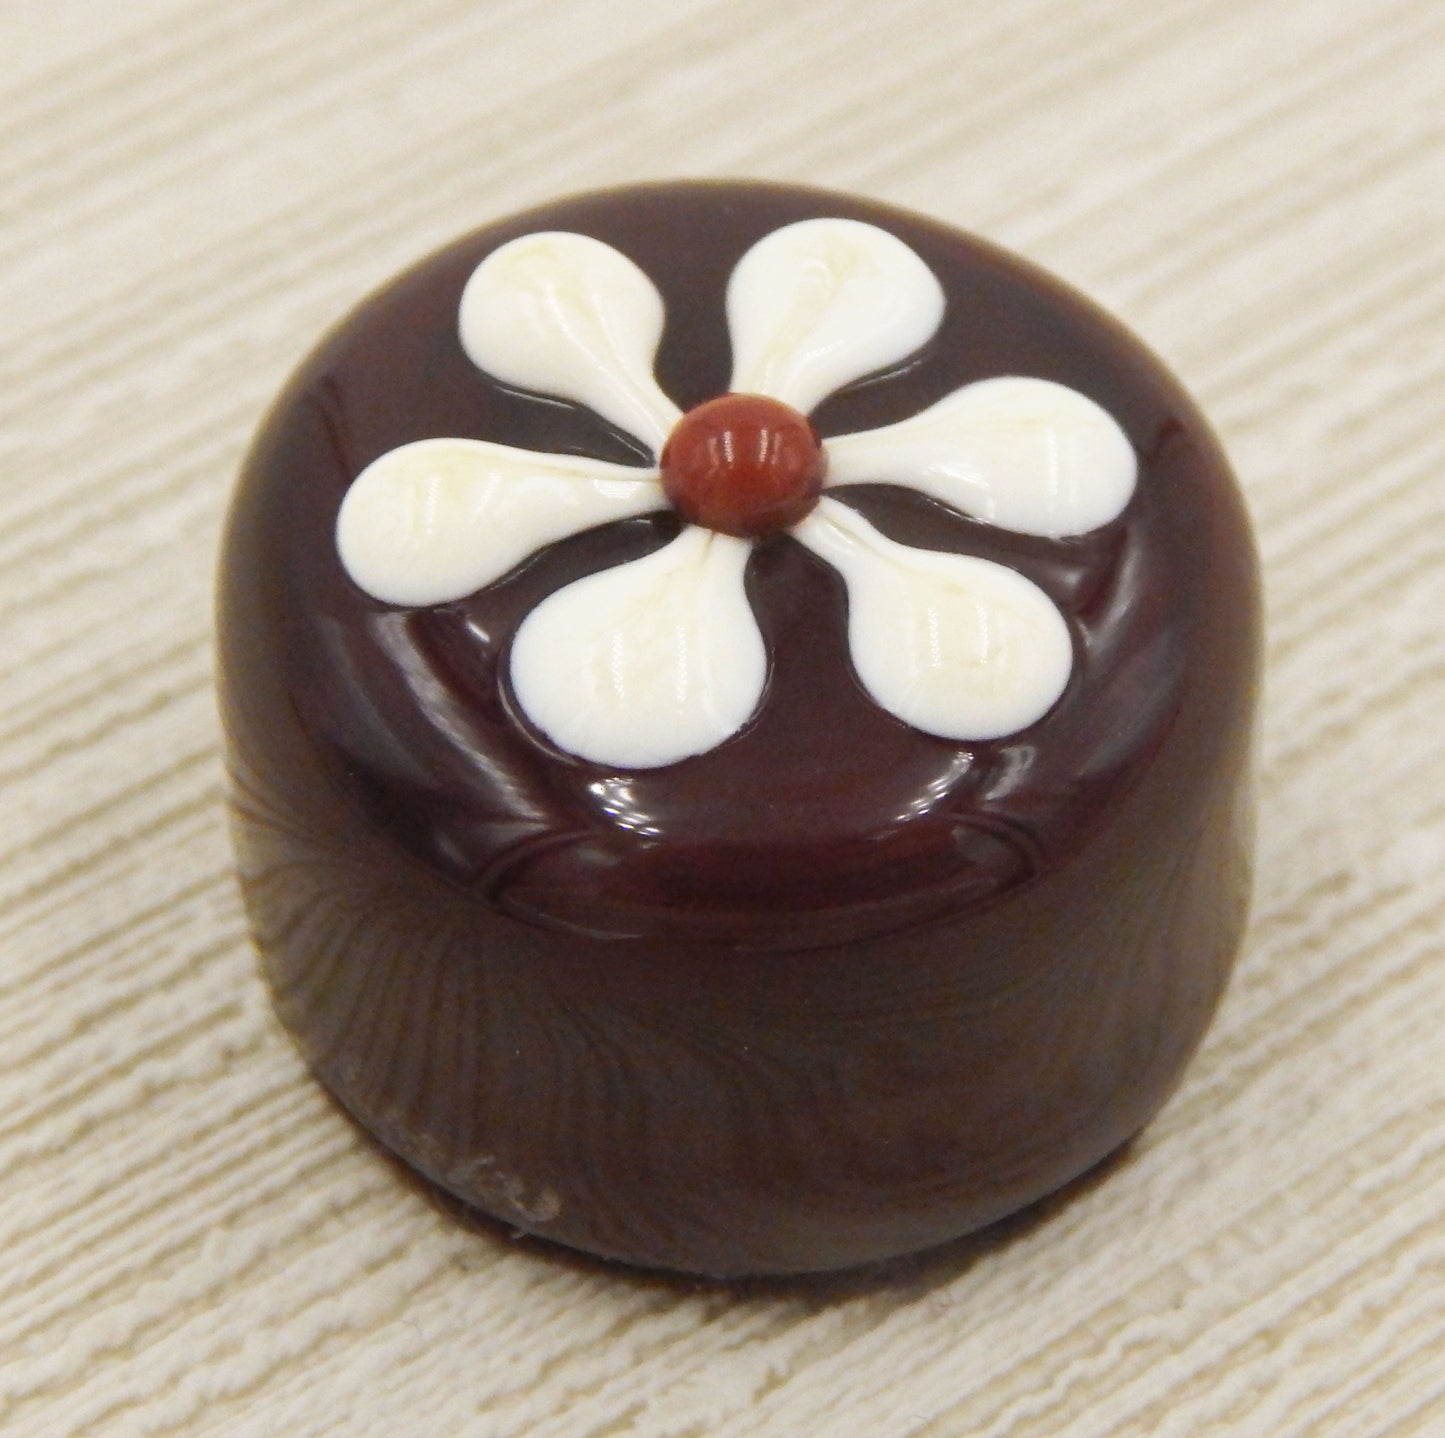 Chocolate with Pansy Design (15-031CVA)